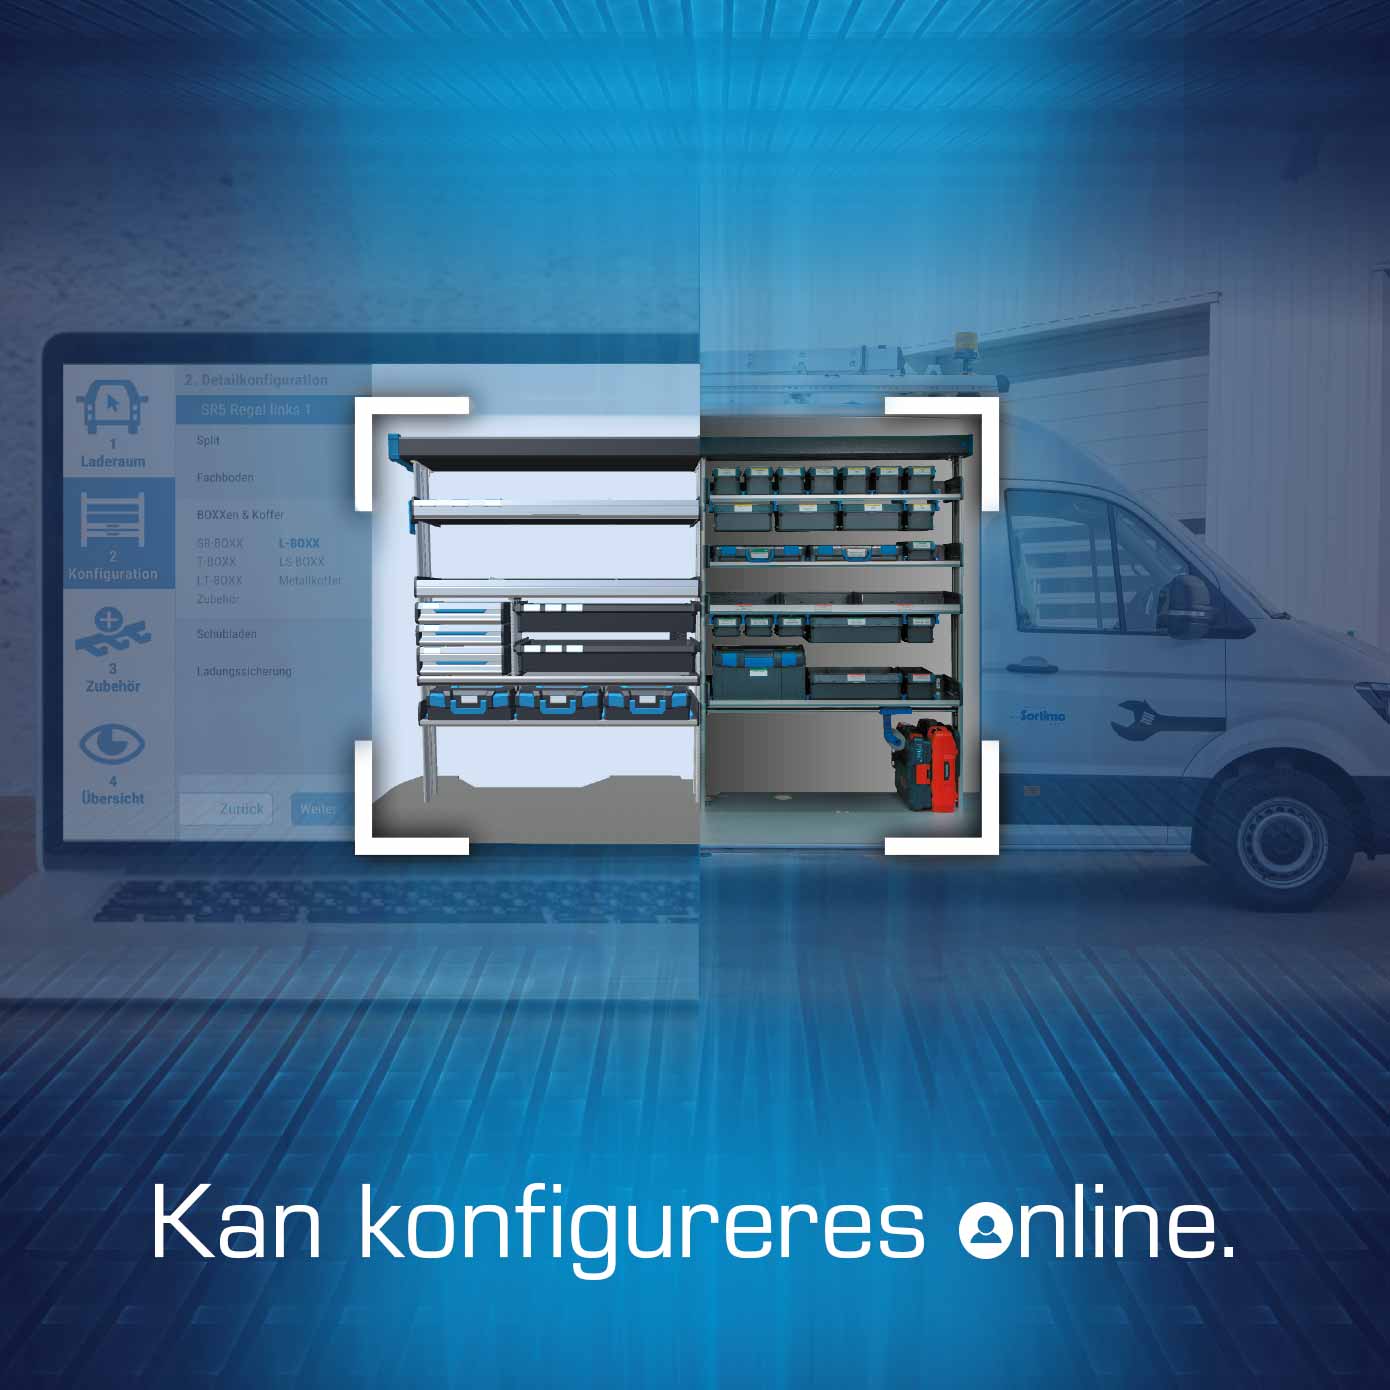 DK-sr5-kampagne-landingpage-online-konfigurierbar-695x695.jpg